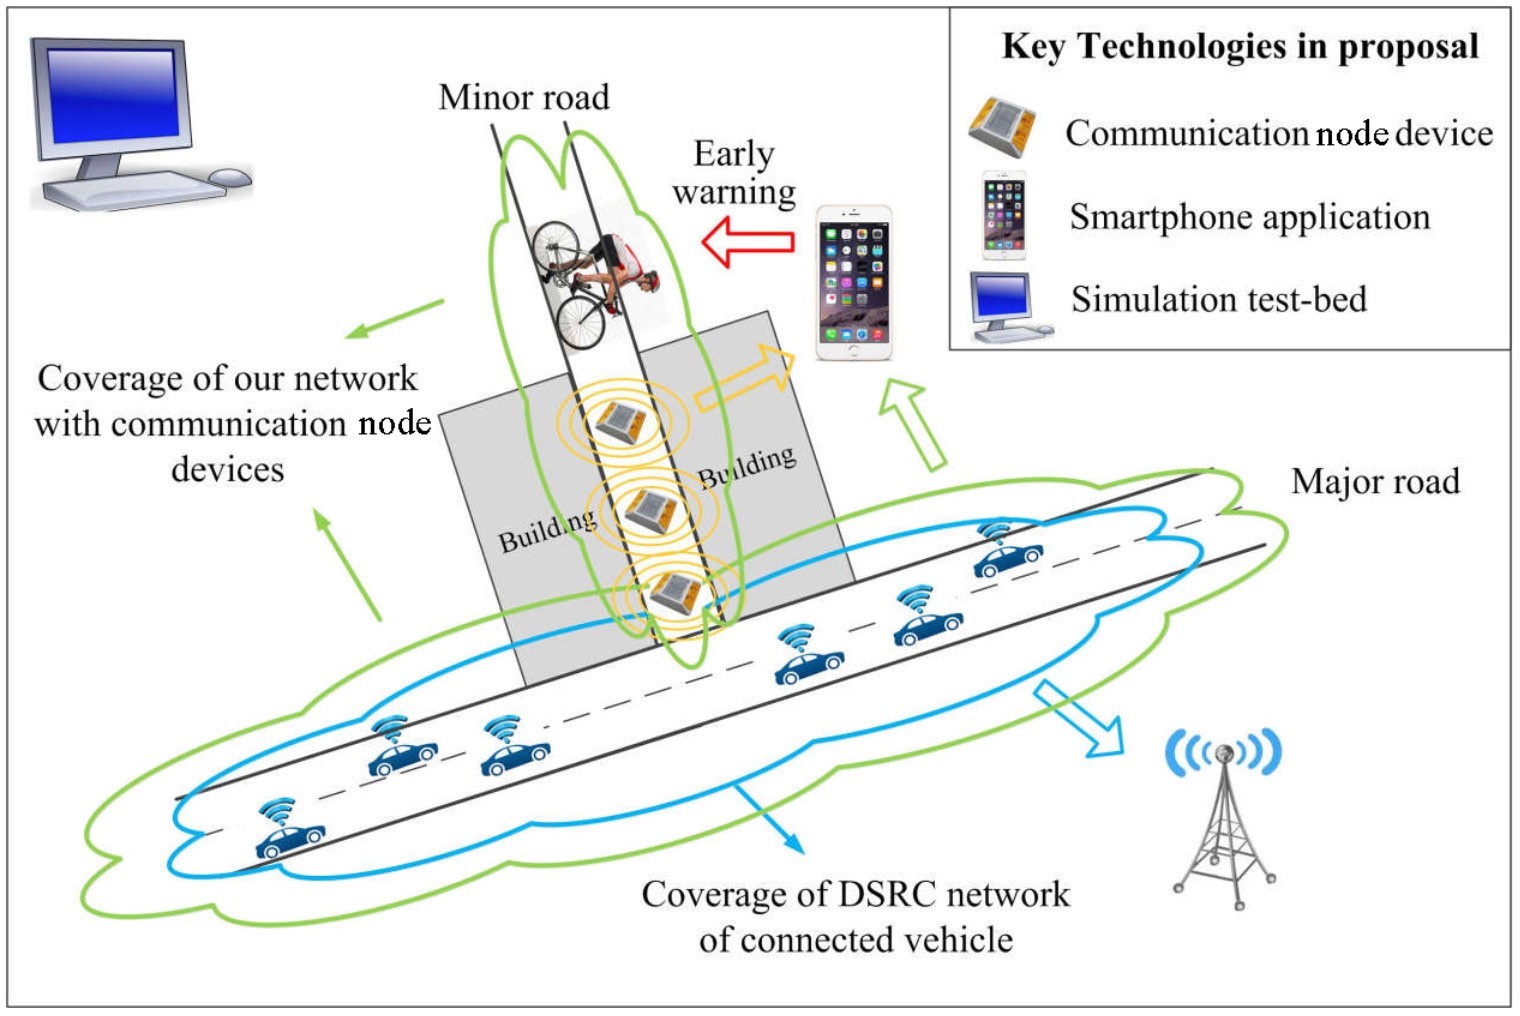 Illustration of the communication node devide application in a vision-restricted street scenario